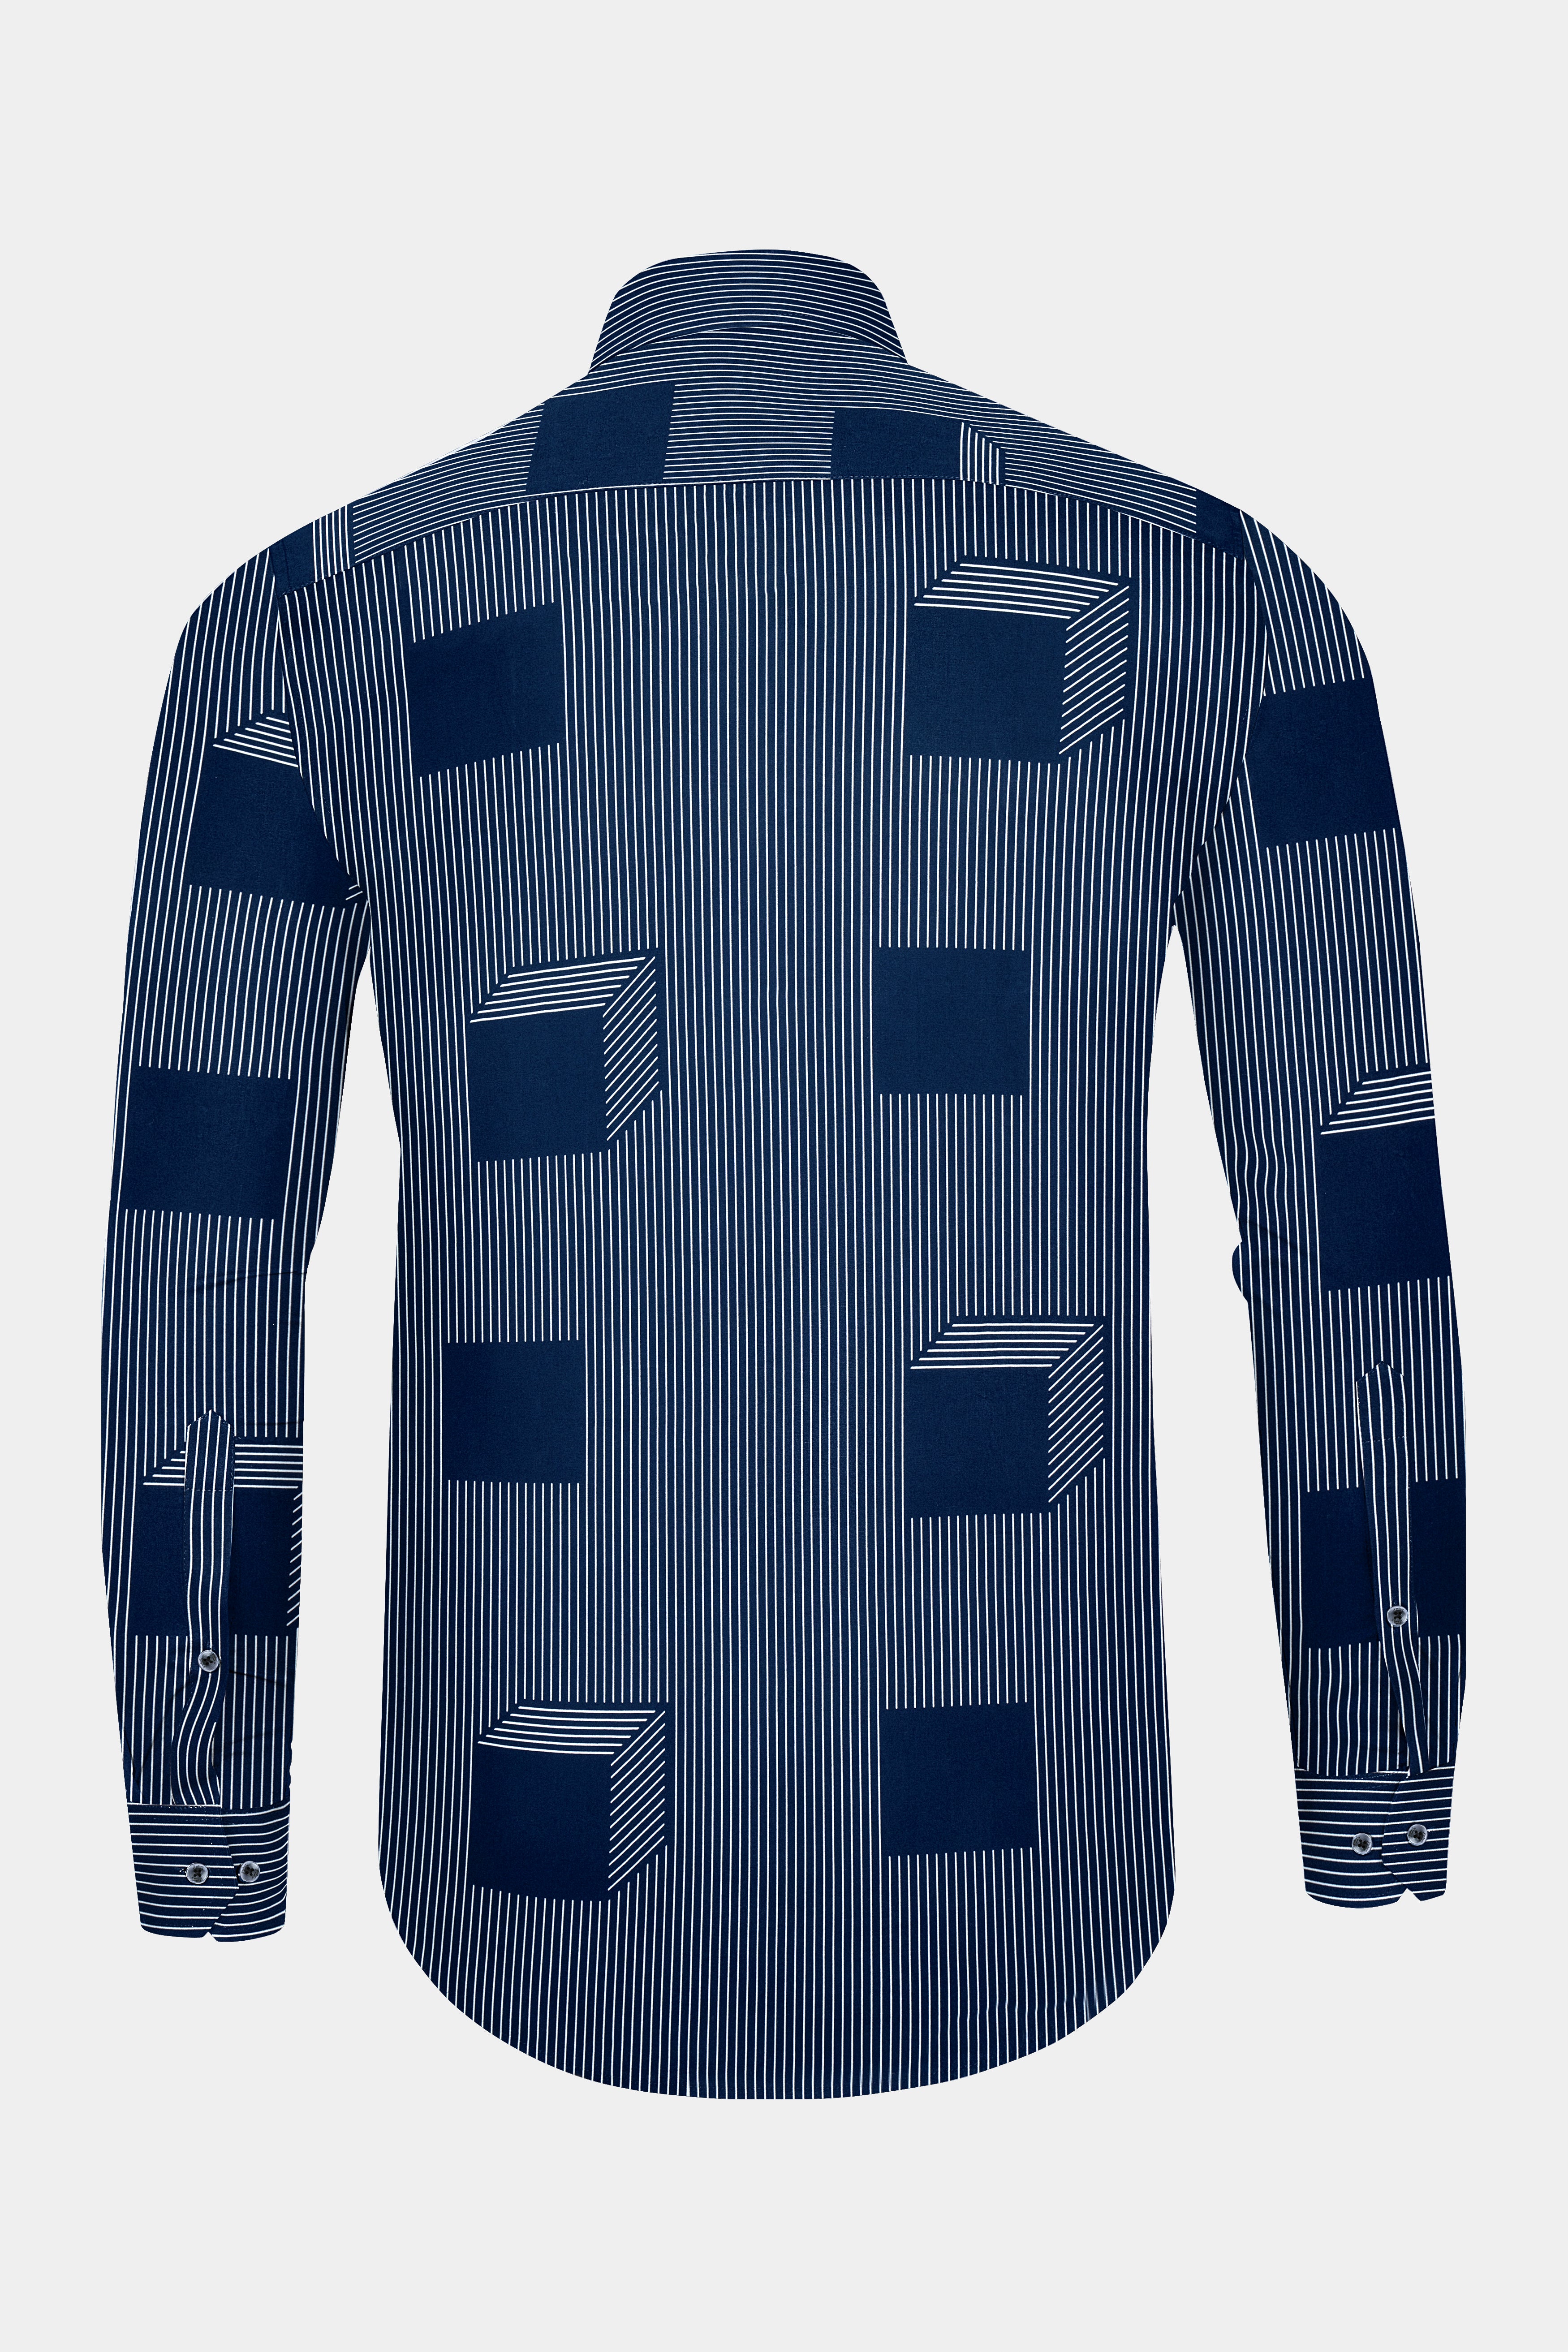 Gunmetal Blue 3D Box Patterned Premium Cotton Shirt